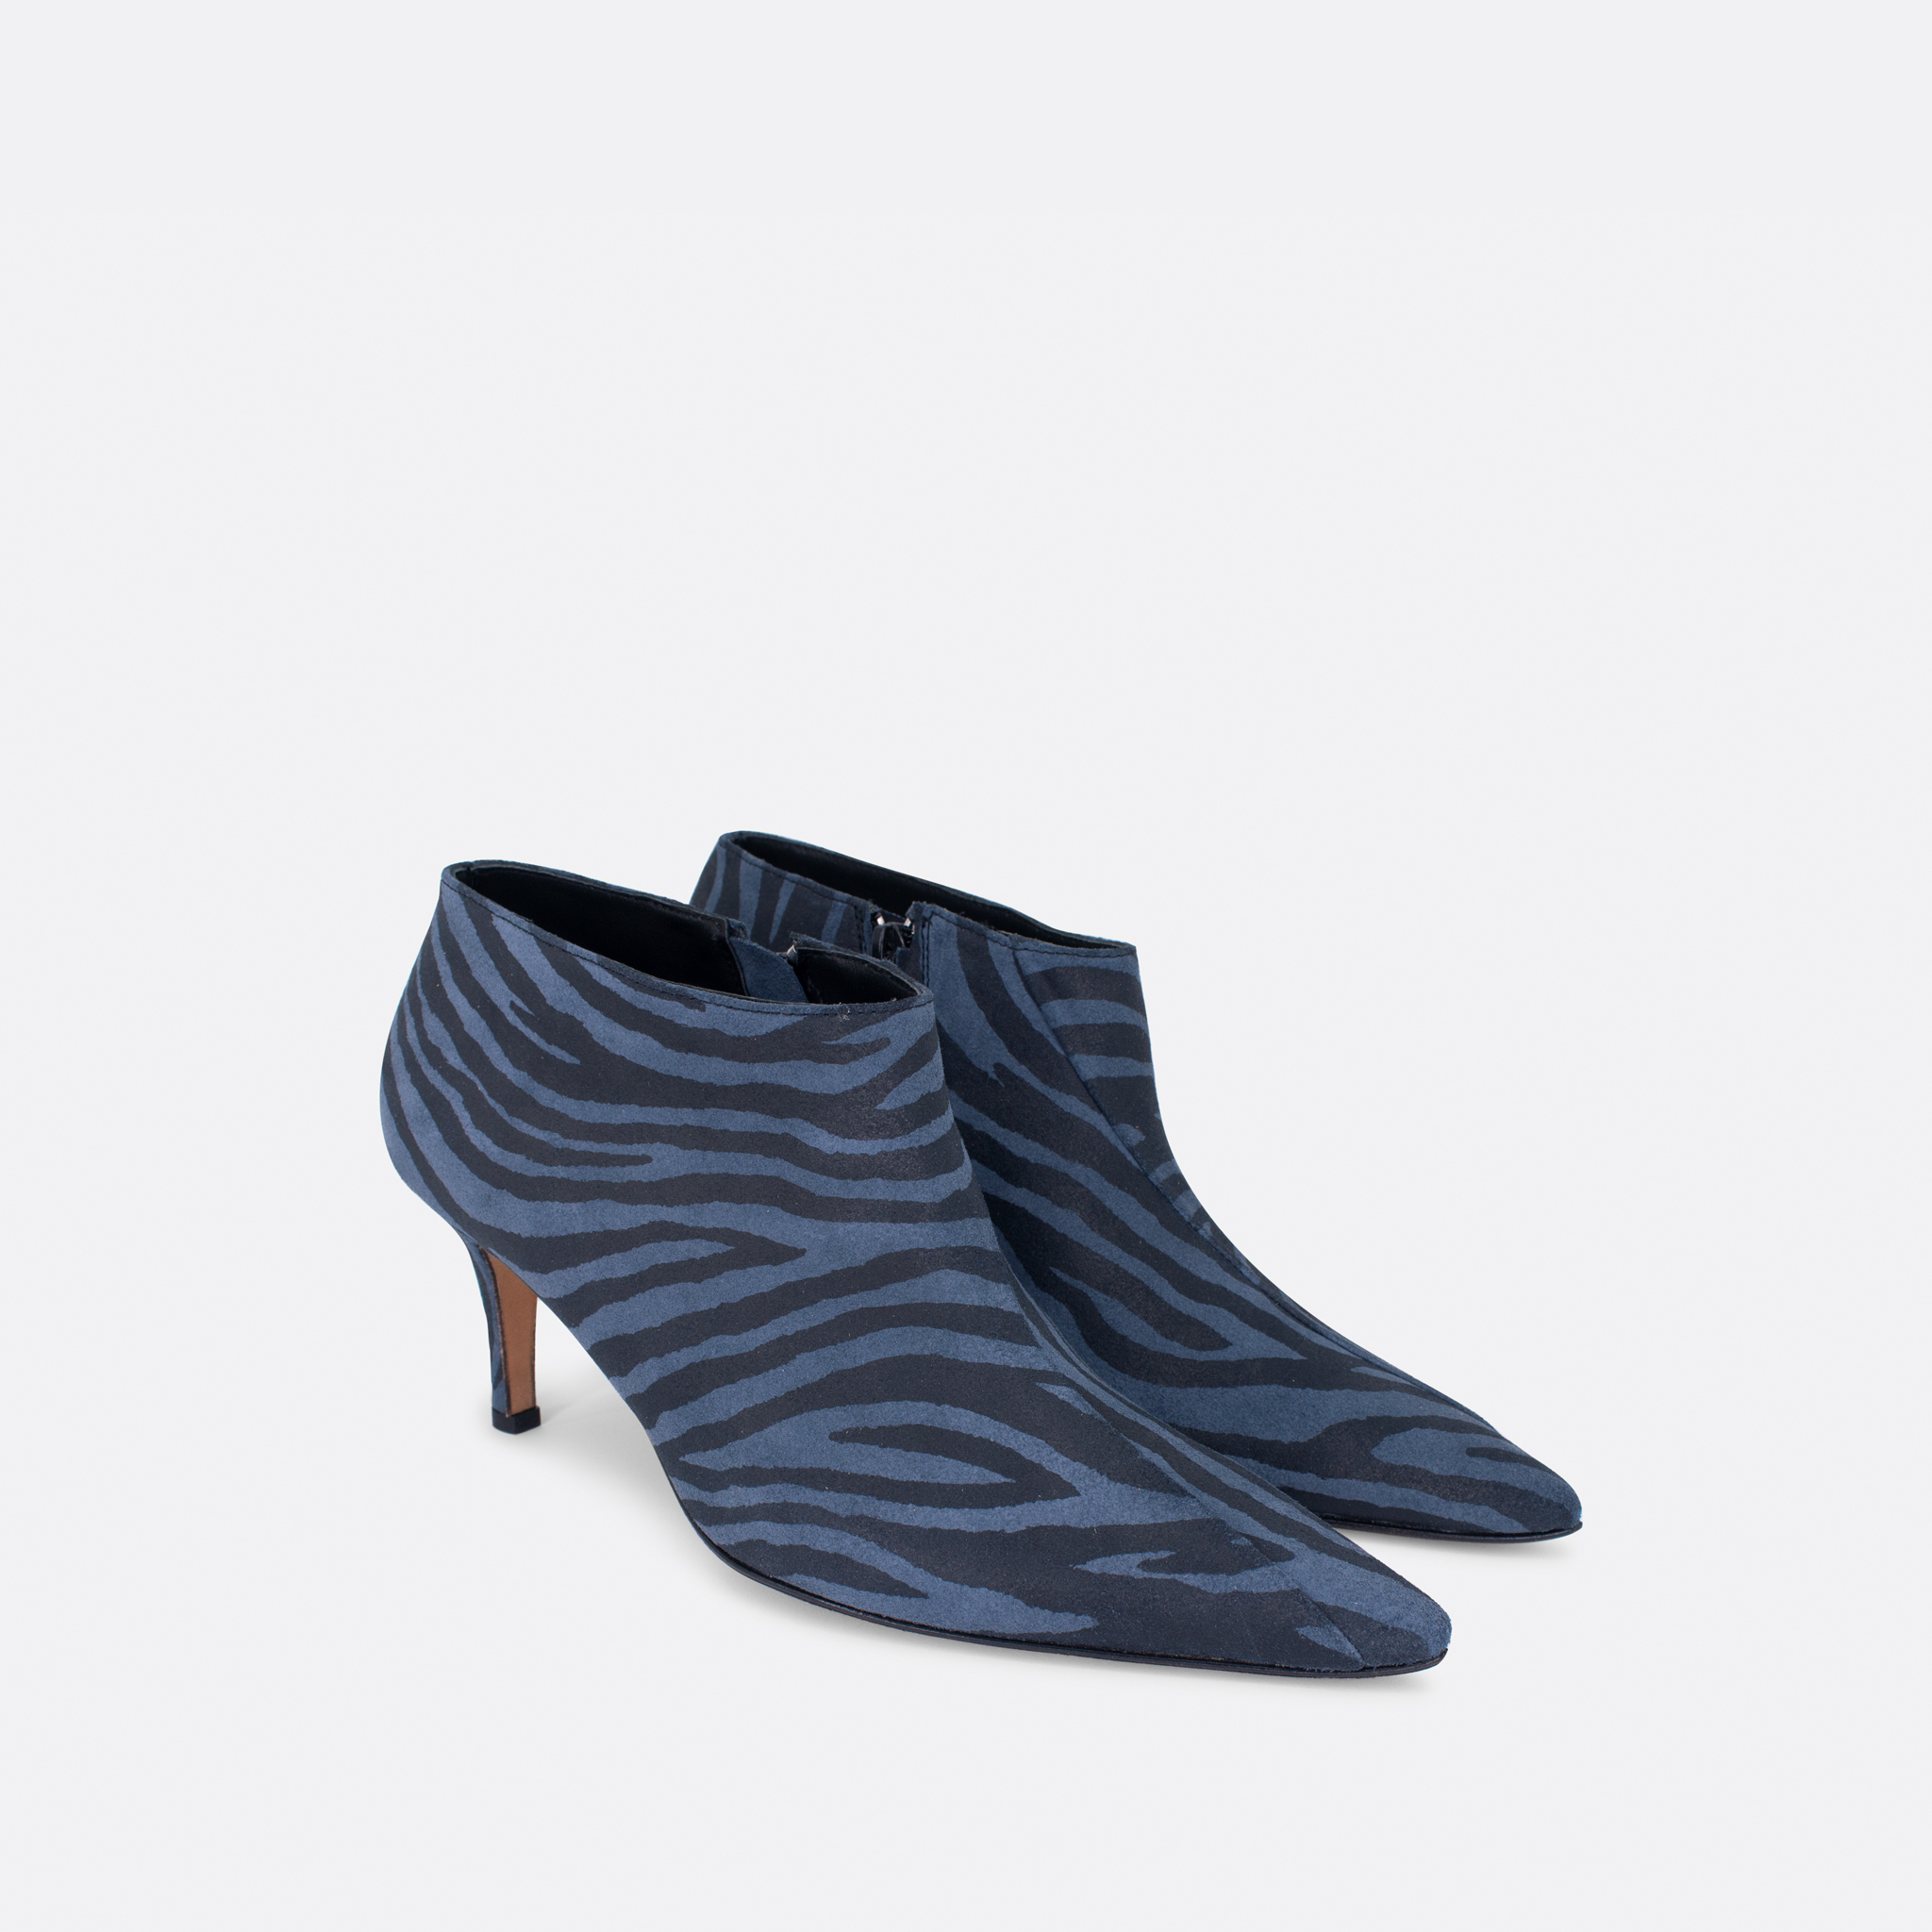 839 Plava zebra 02 - Lilu shoes